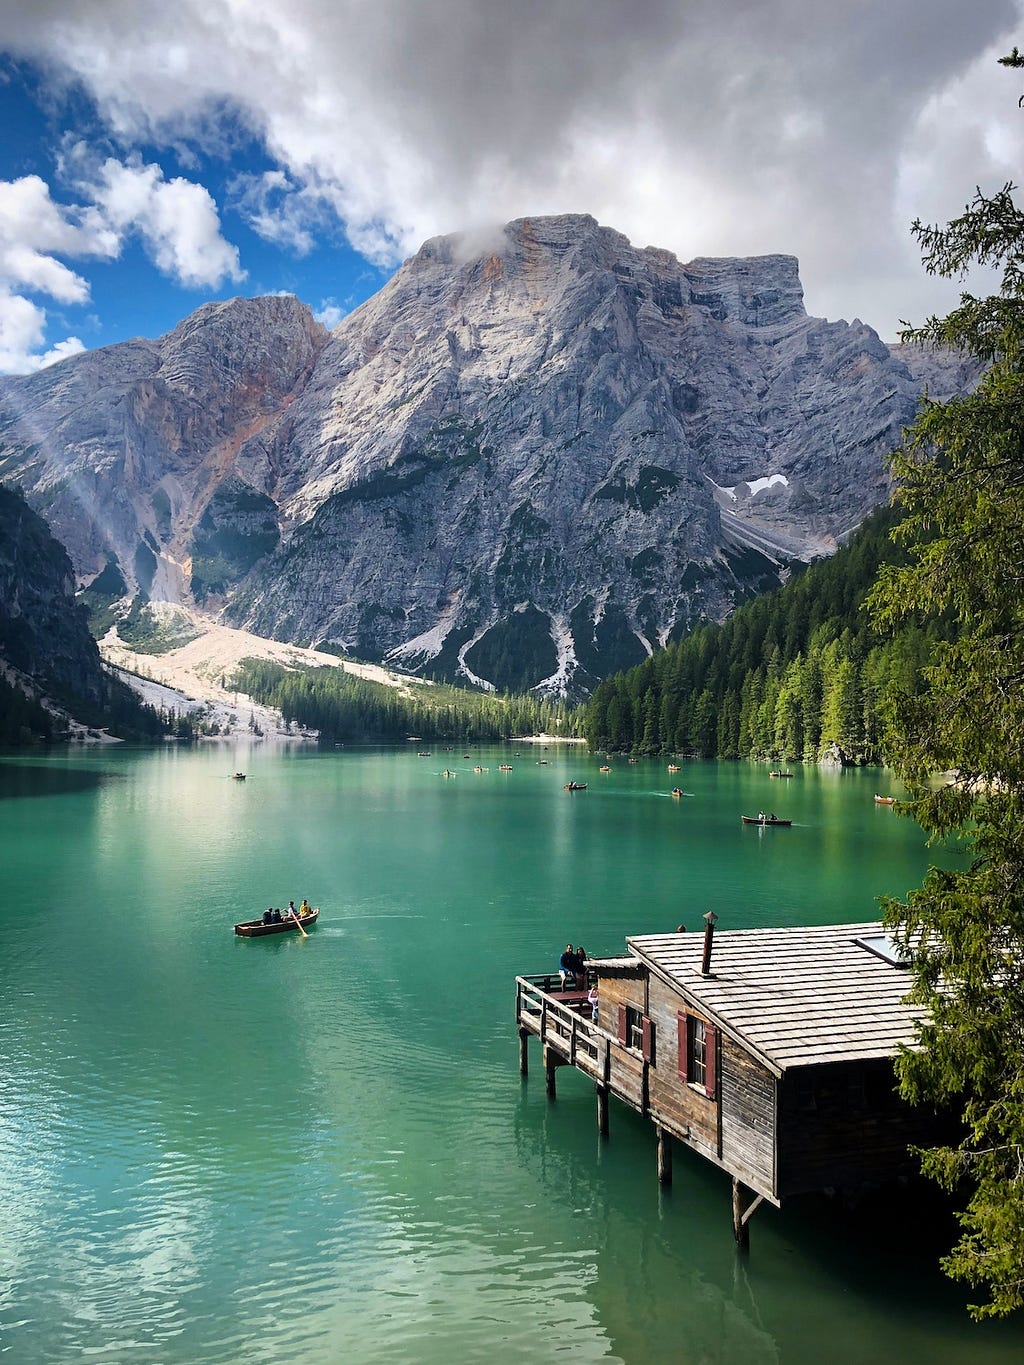 Beautiful scenery of the Dolomites